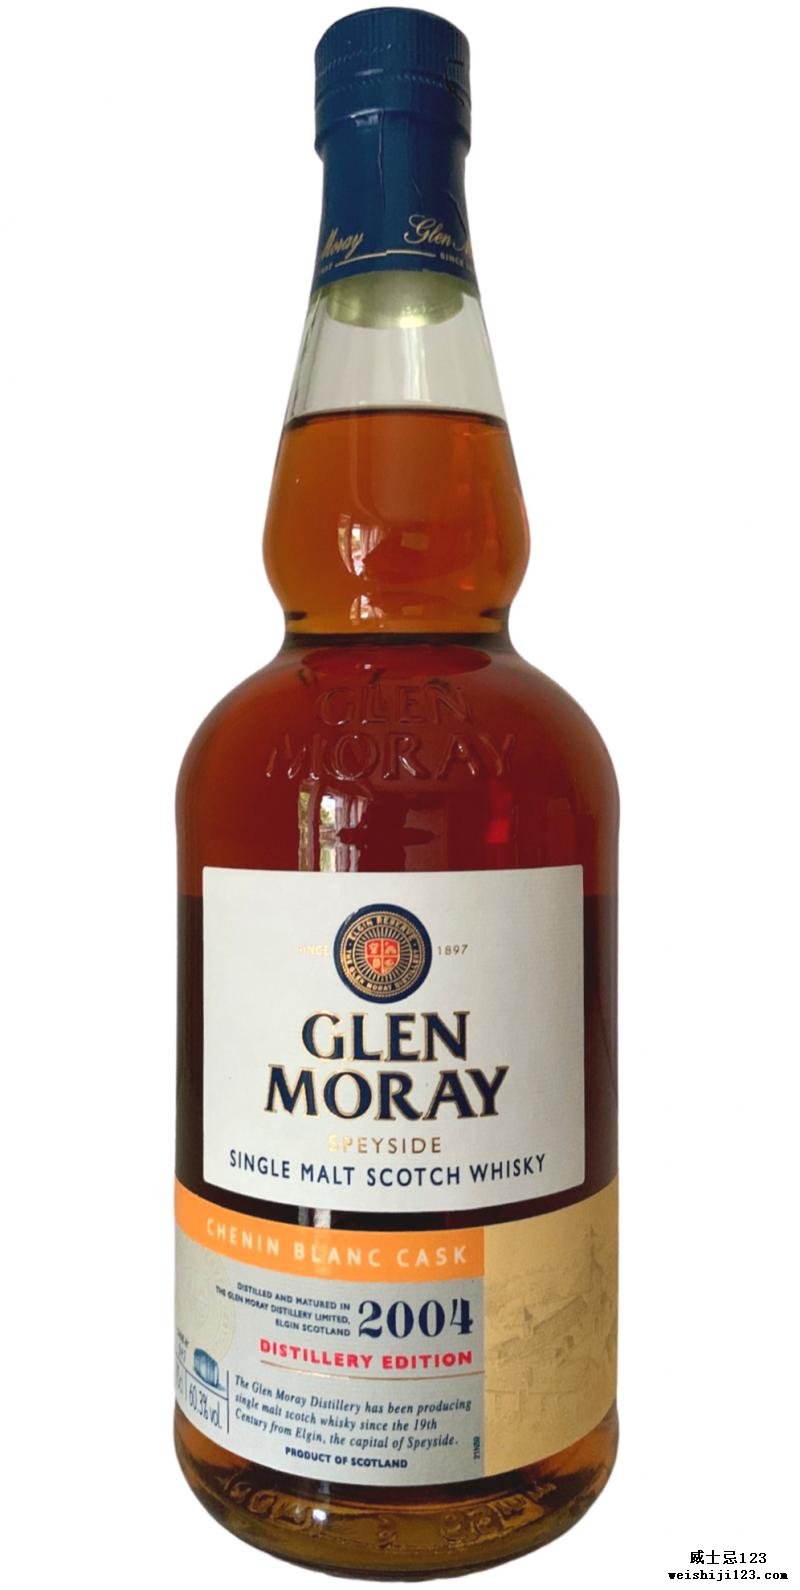 Glen Moray 2004 Chenin Blanc Cask